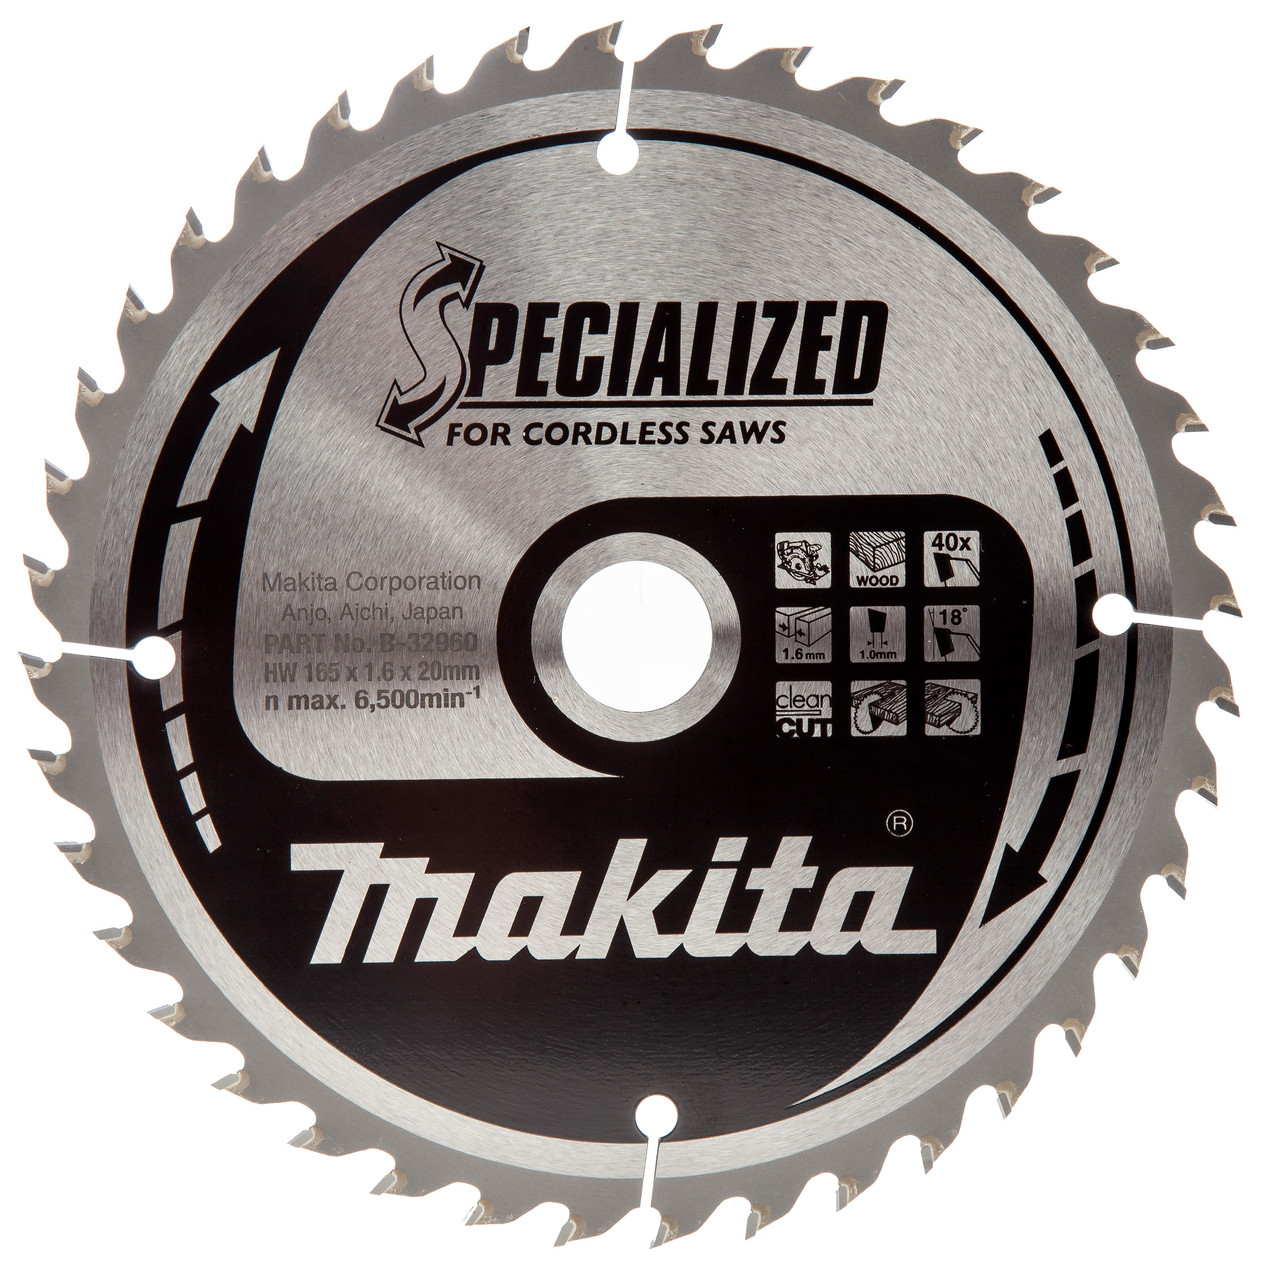 Photos - Cutting Disc Makita B-32960 Saw Blade for Cordless Saws 165mm x 20mm x 40T 